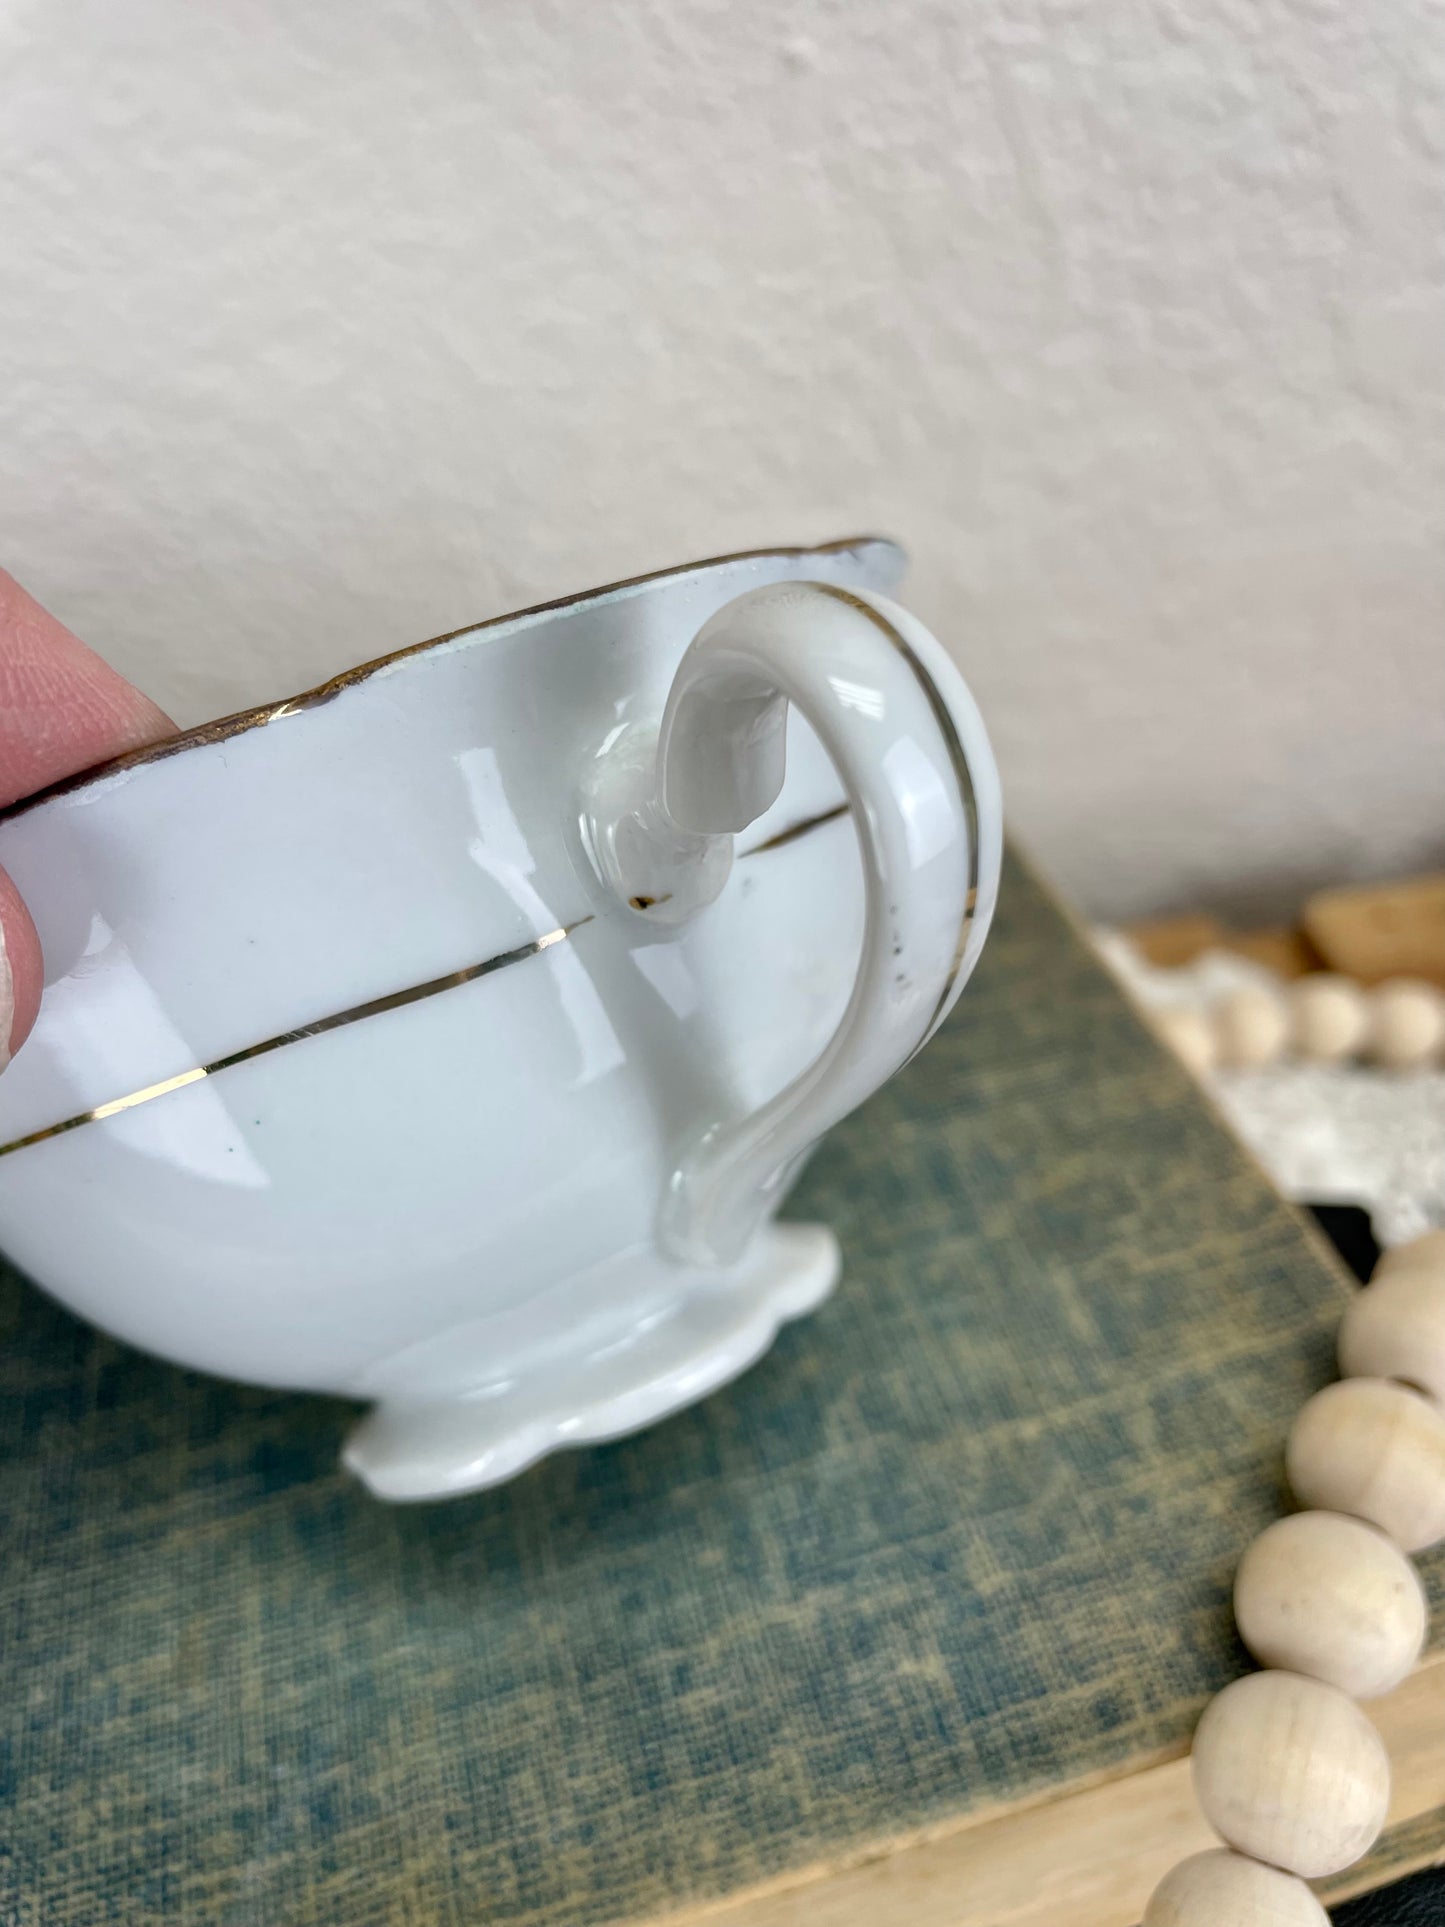 Vintage Shafford Japan Hand Painted Teacup